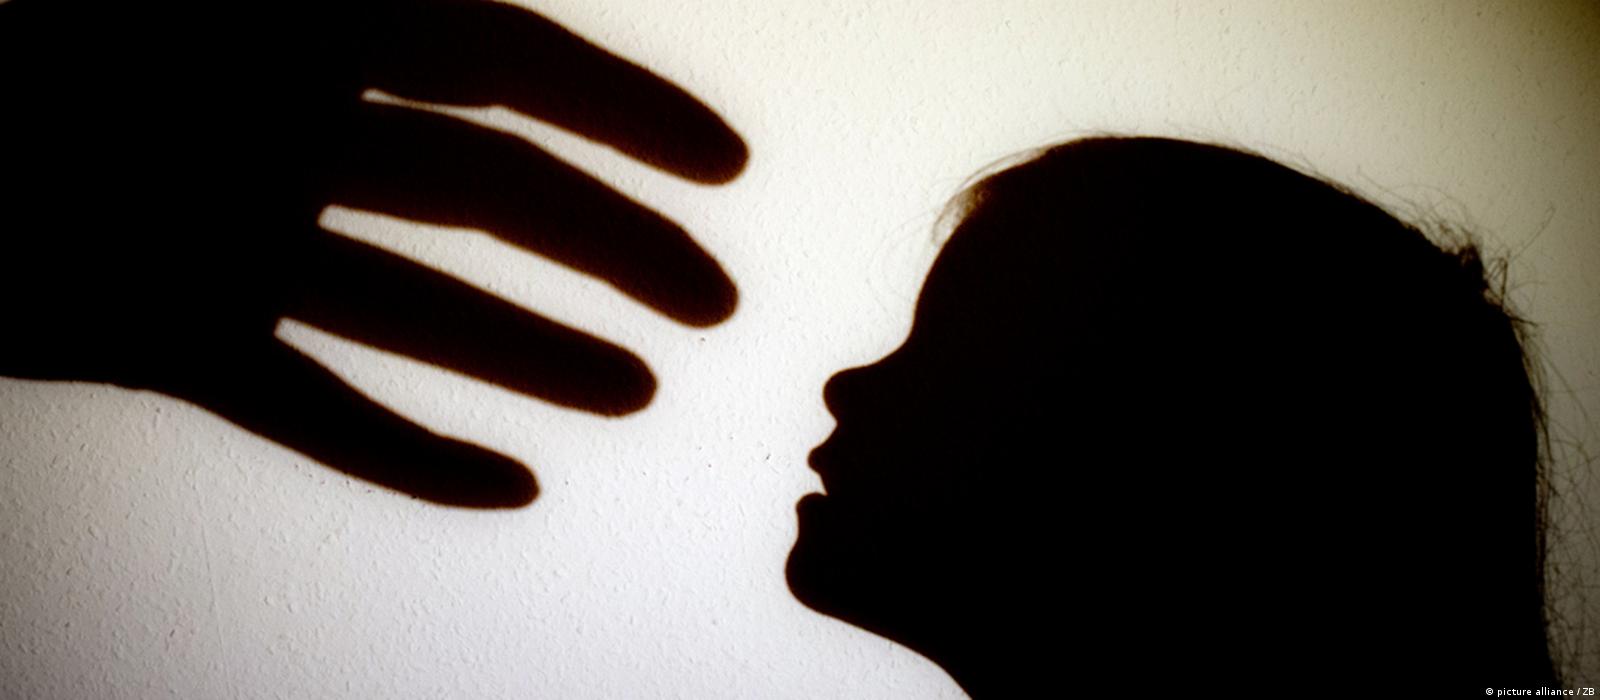 Xxx Video Download Mishr Girl - Sex crimes, child rapes horrify Bangladesh â€“ DW â€“ 07/10/2019